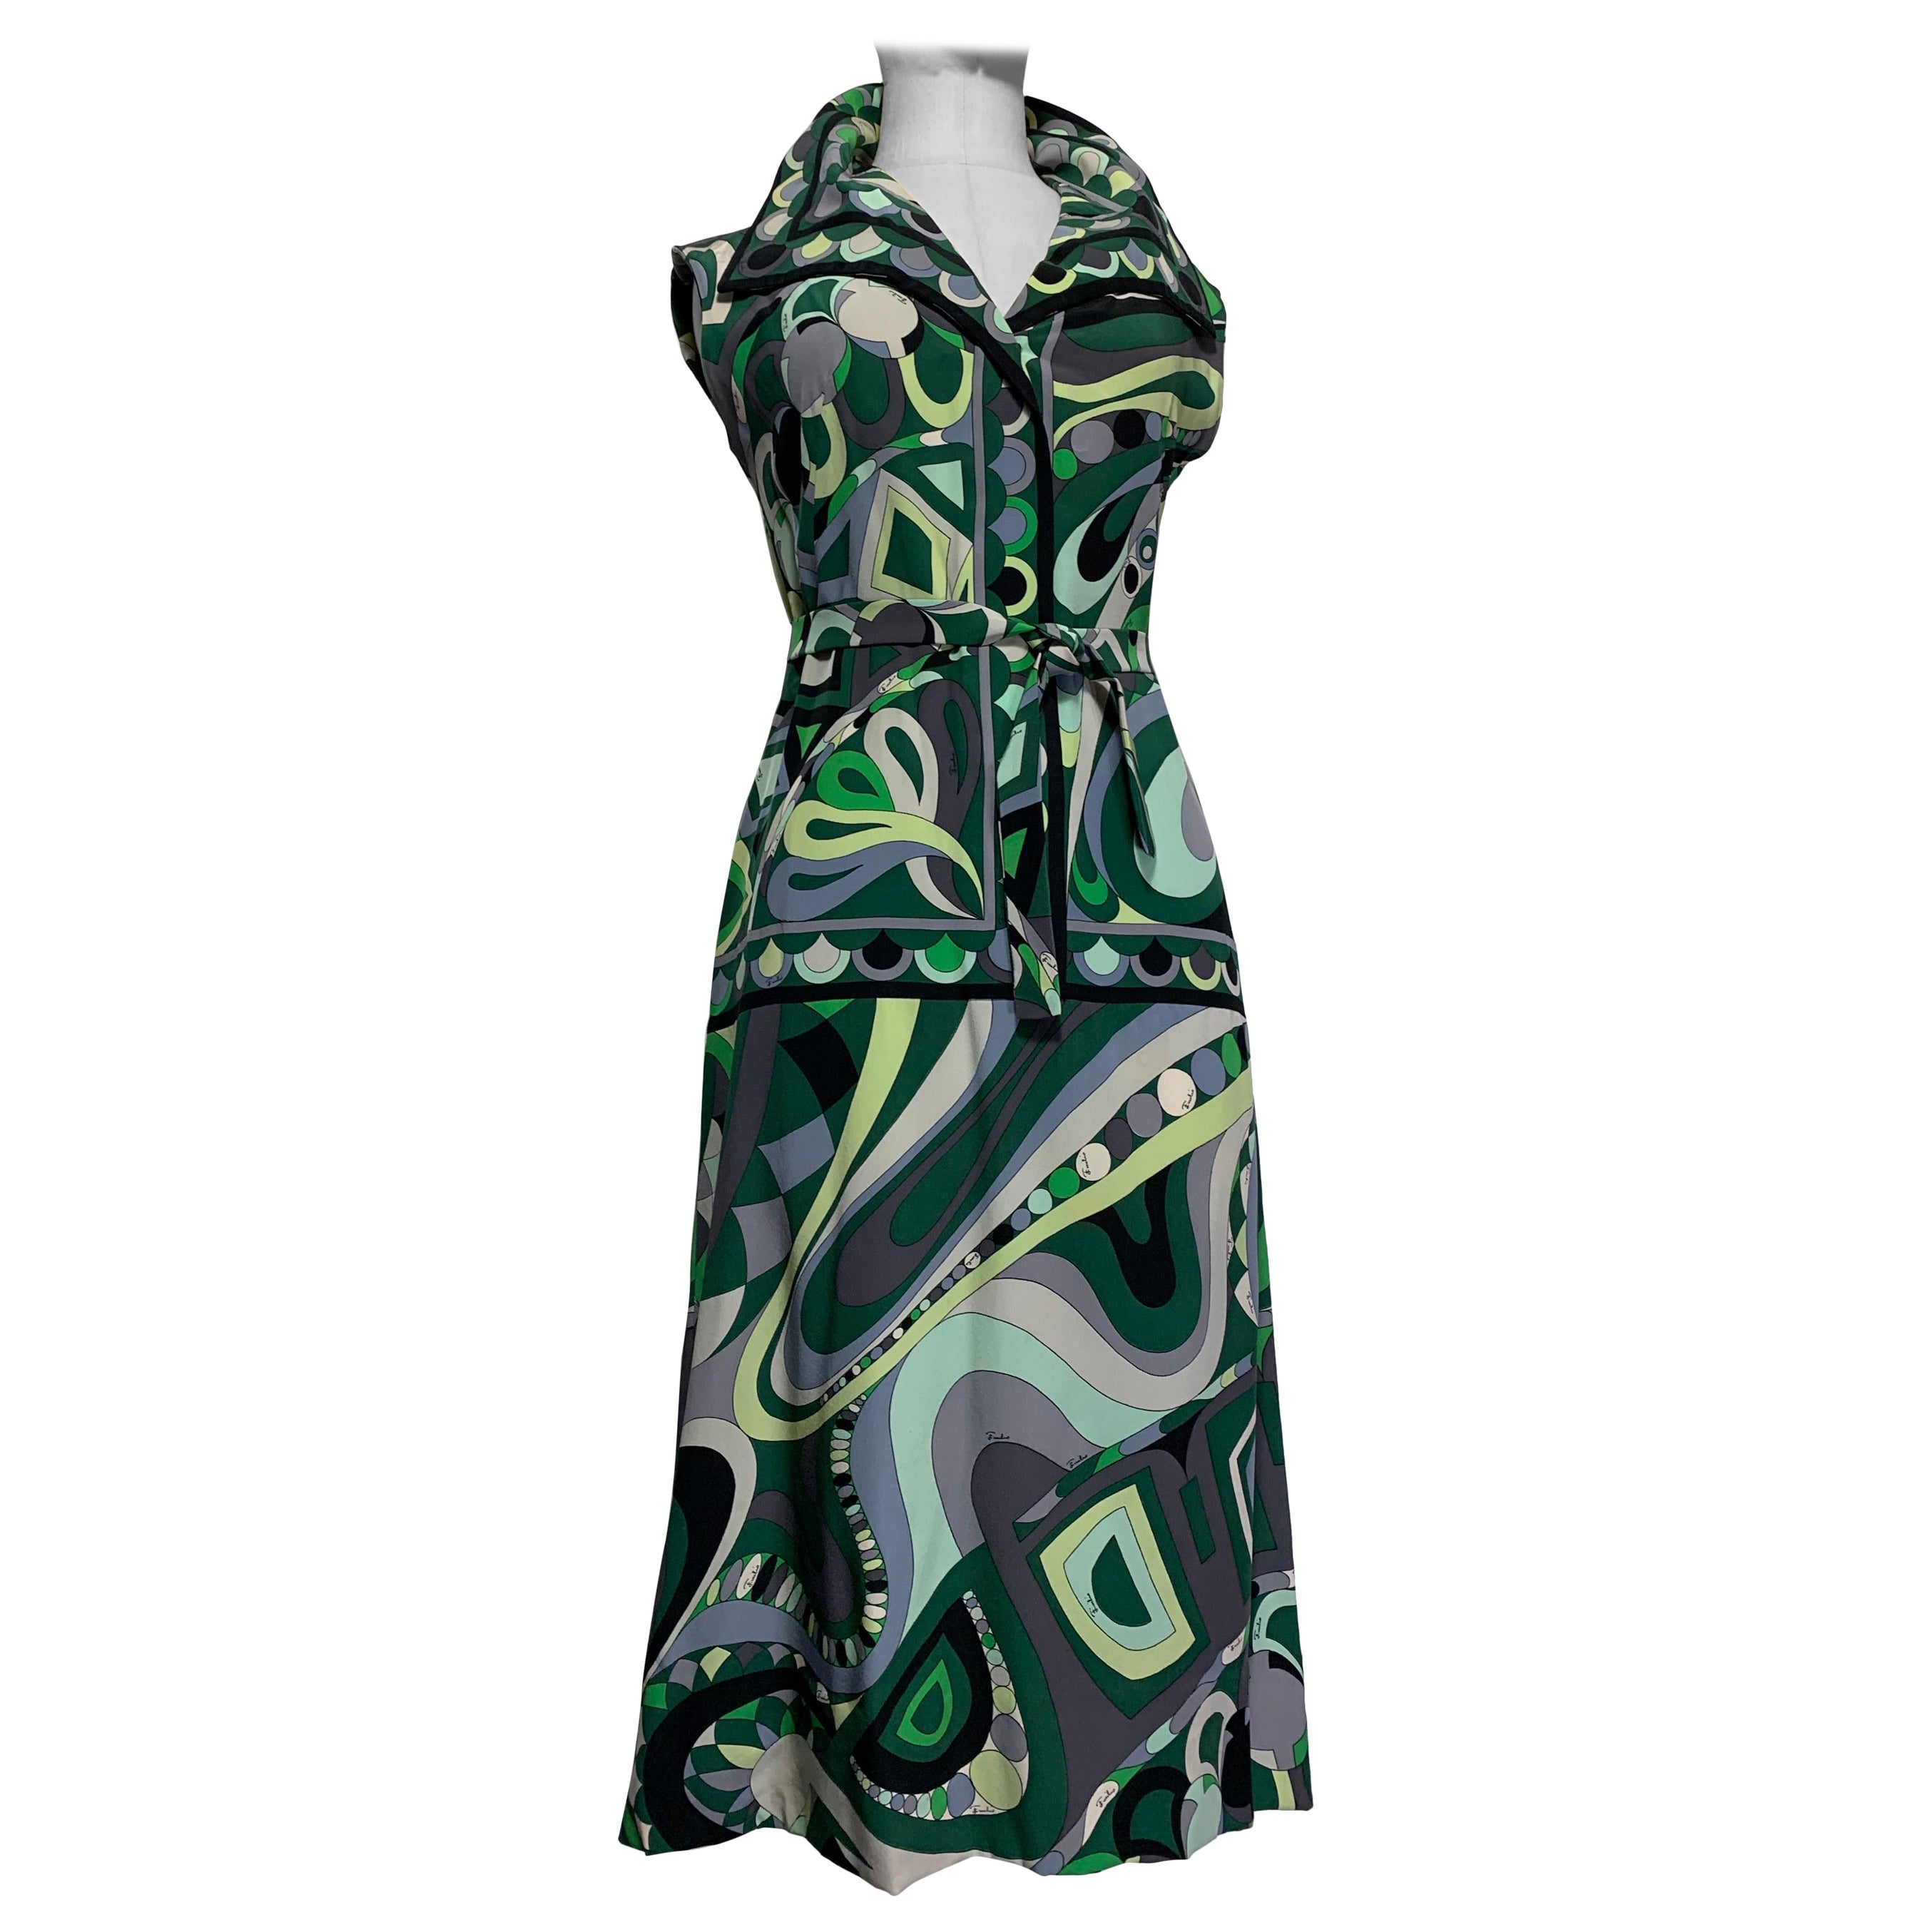 1960s Emilio Pucci Mod Print Silk Day Dress in Greens Black & Gray w Wide Collar For Sale